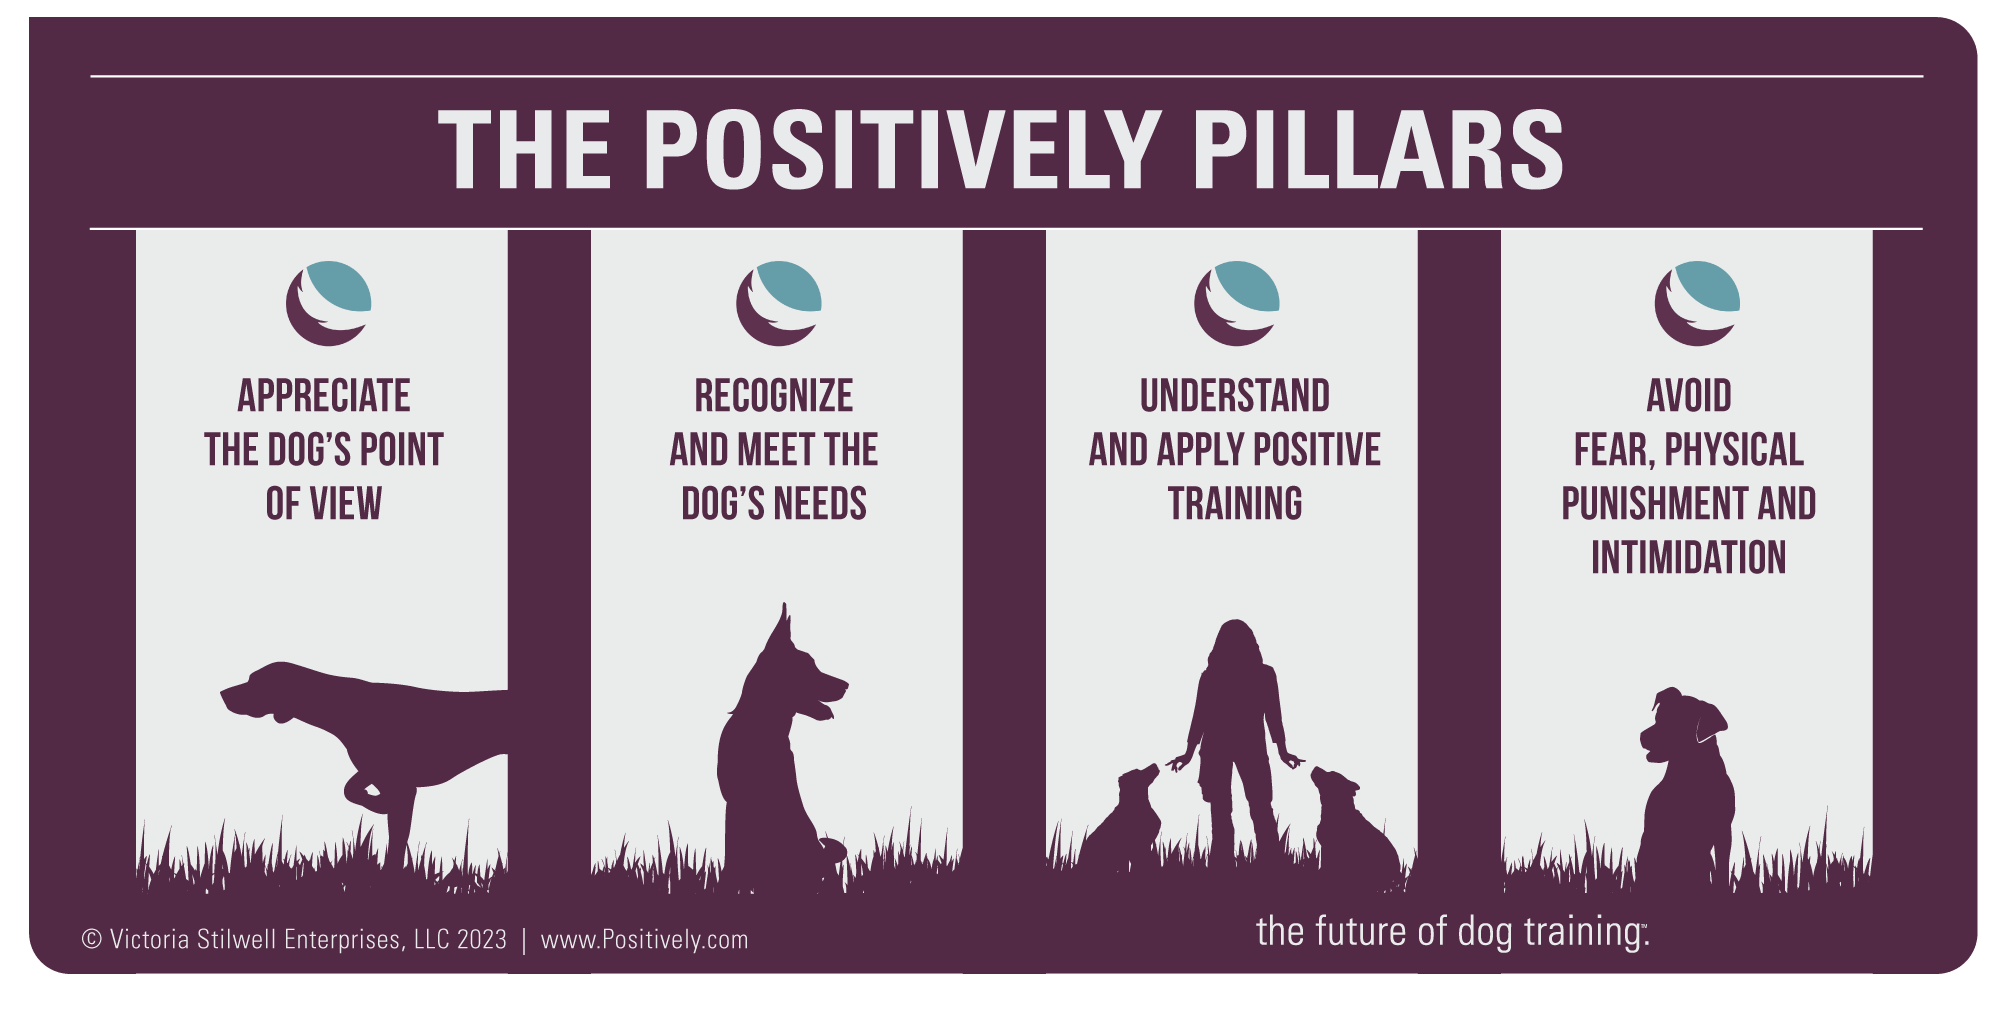 Positively Pillar #4